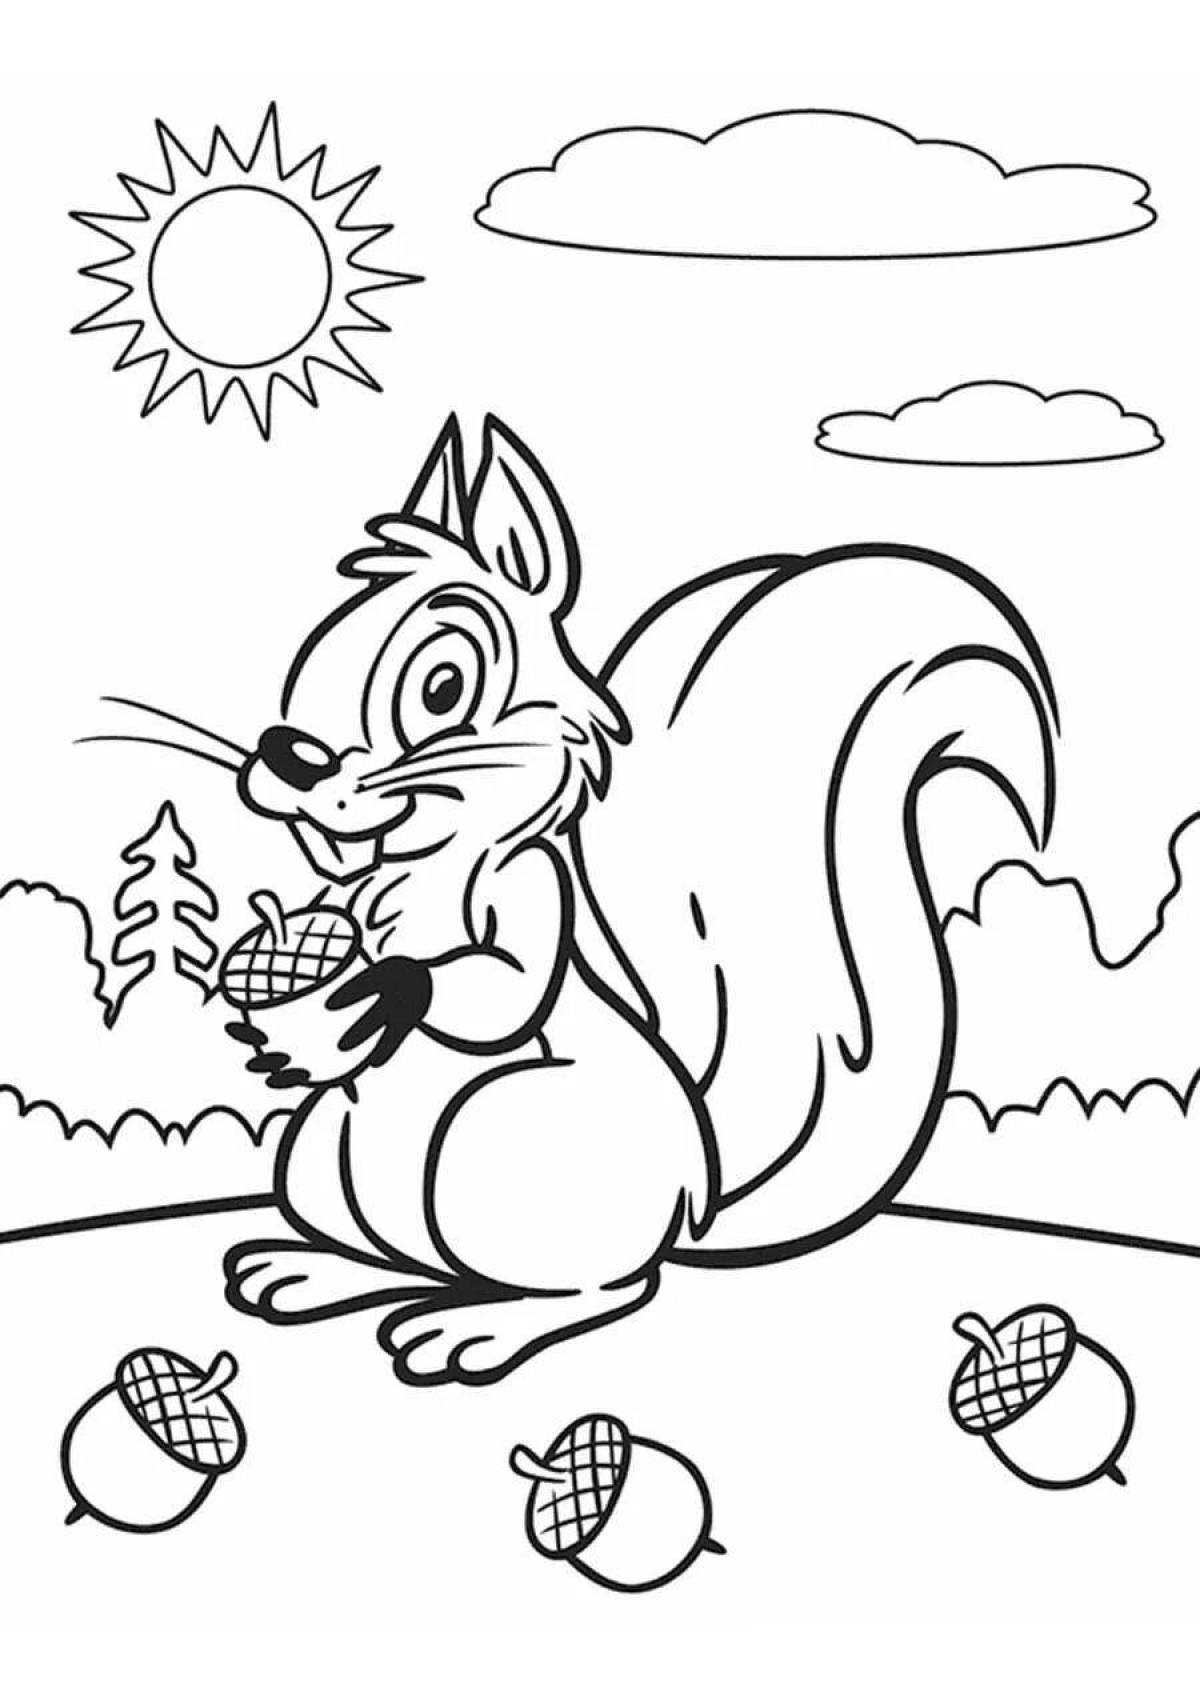 Adorable squirrel with nuts coloring book